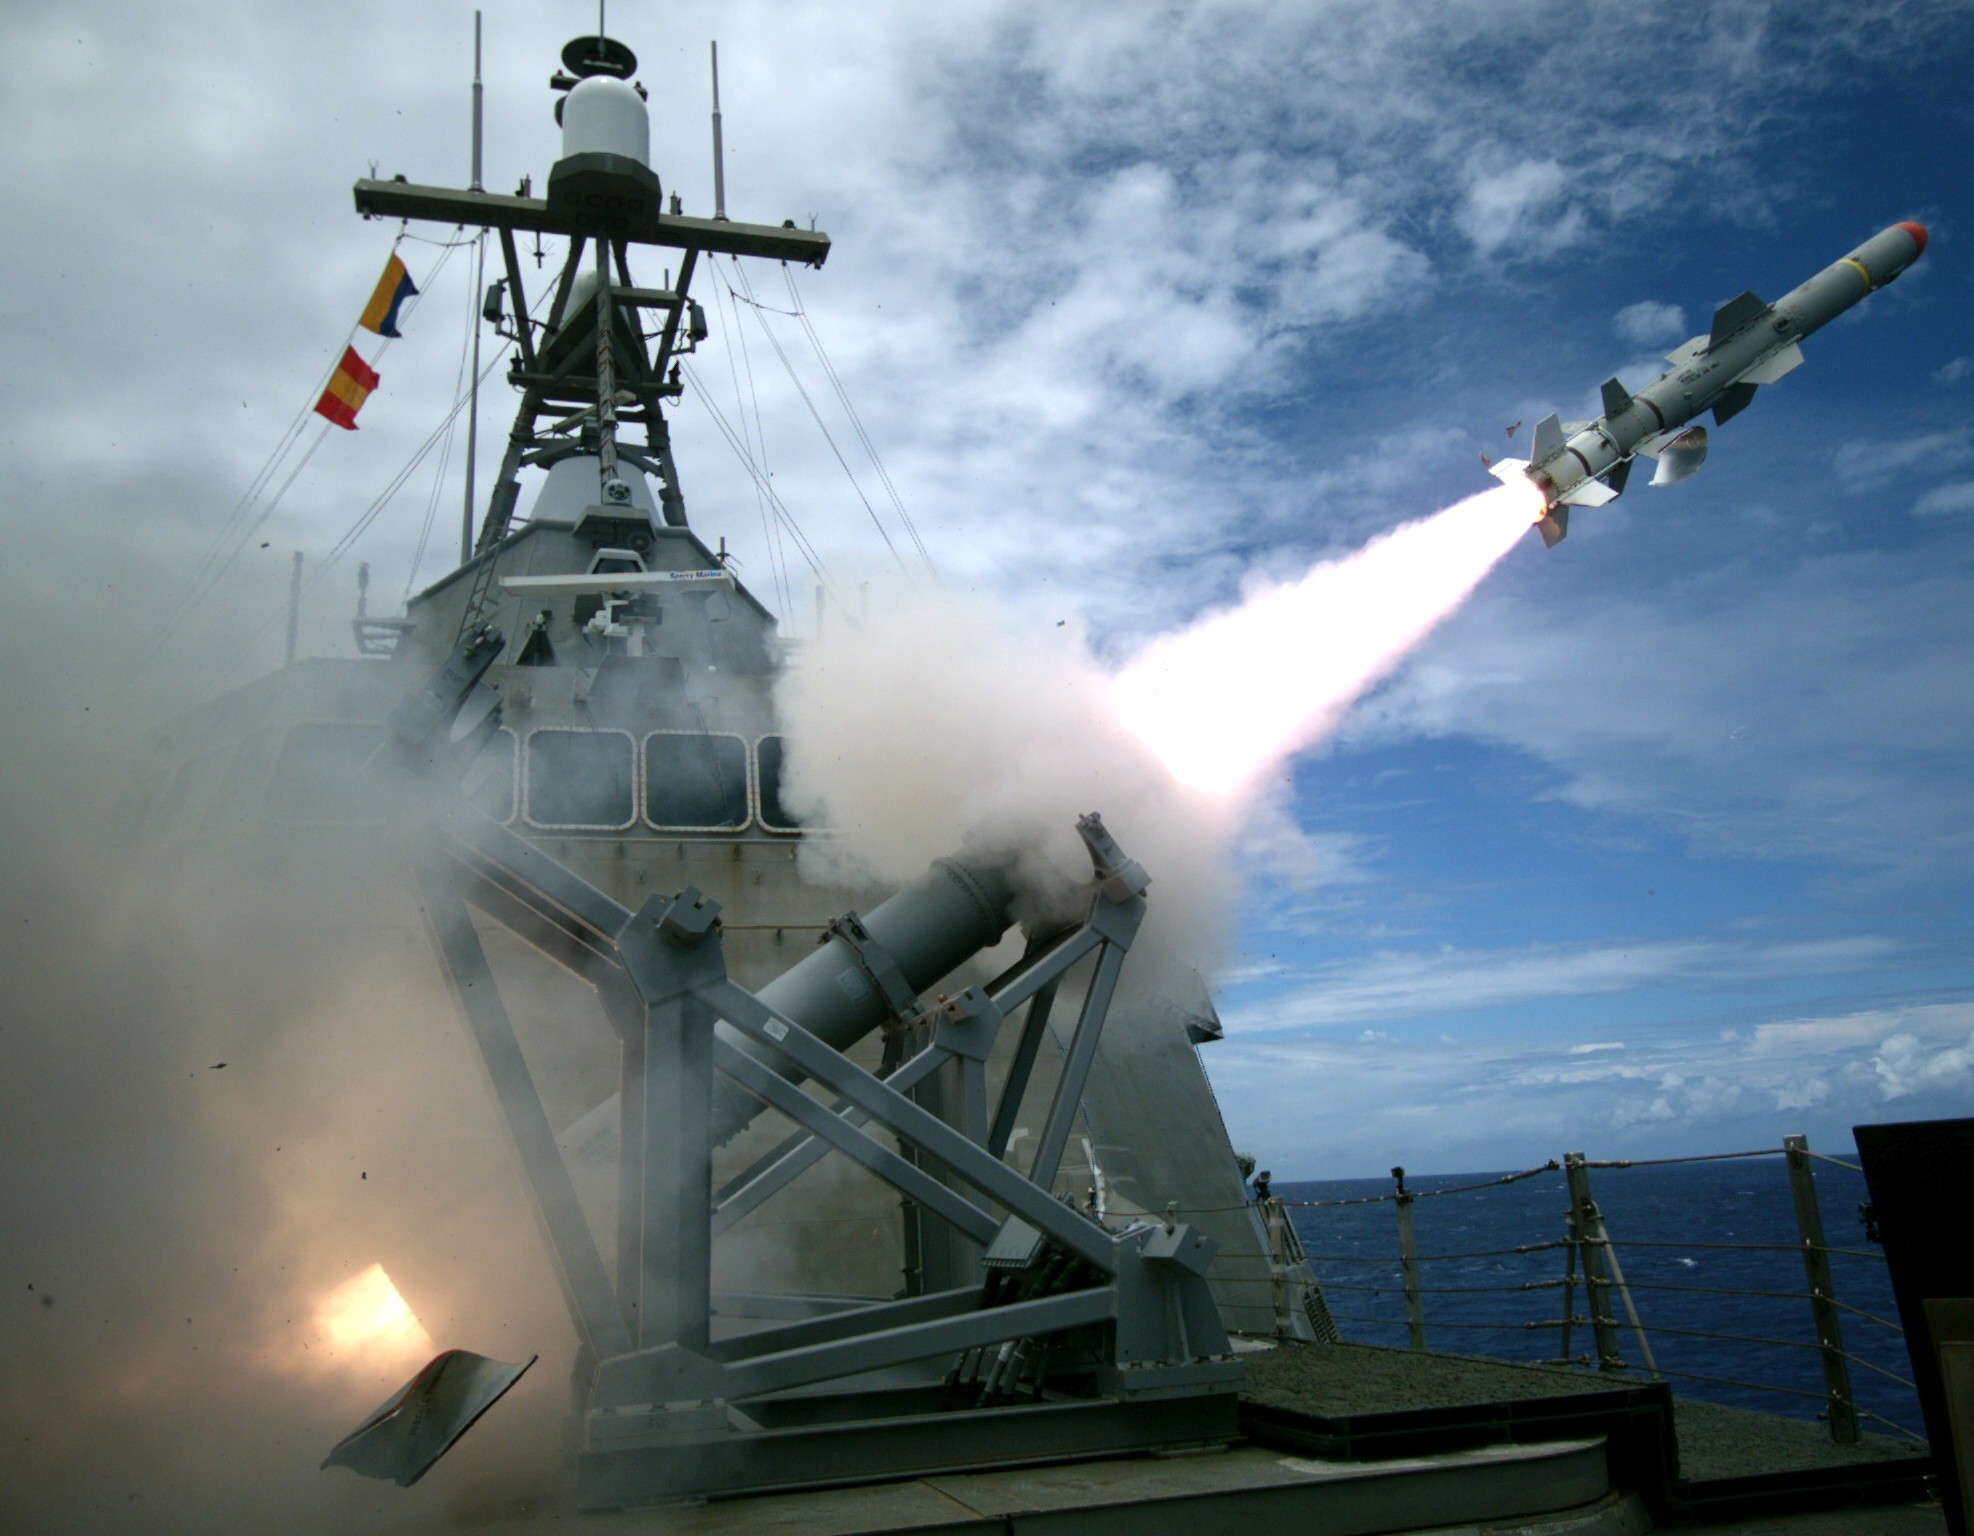 lcs-4 uss coronado independence class littoral combat ship us navy 09 rgm-84 harpoon ssm missile exercise